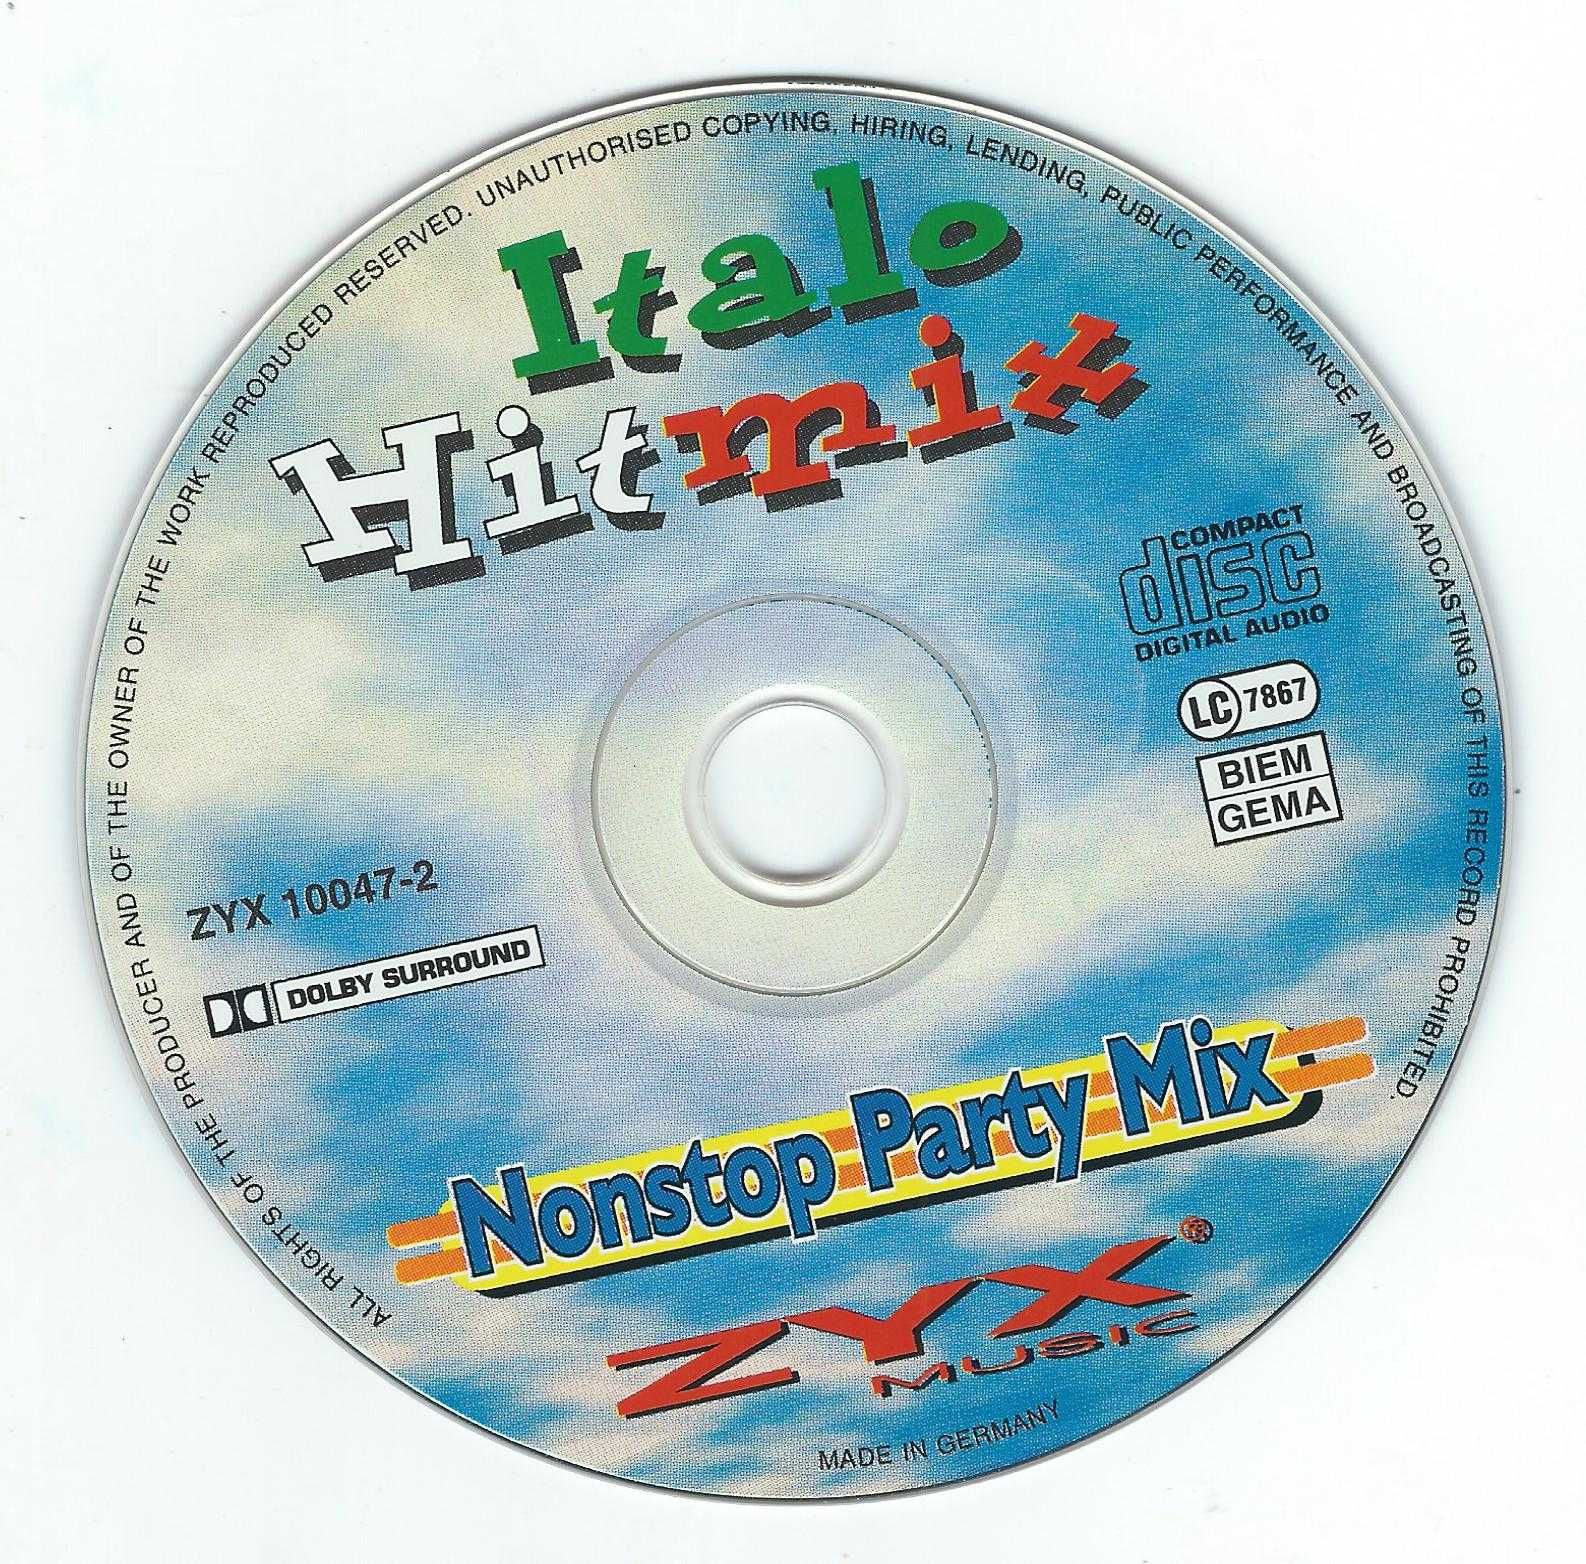 CD VA - Italo Hitmix Nonstop Party Mix (1997) (ZYX Music)